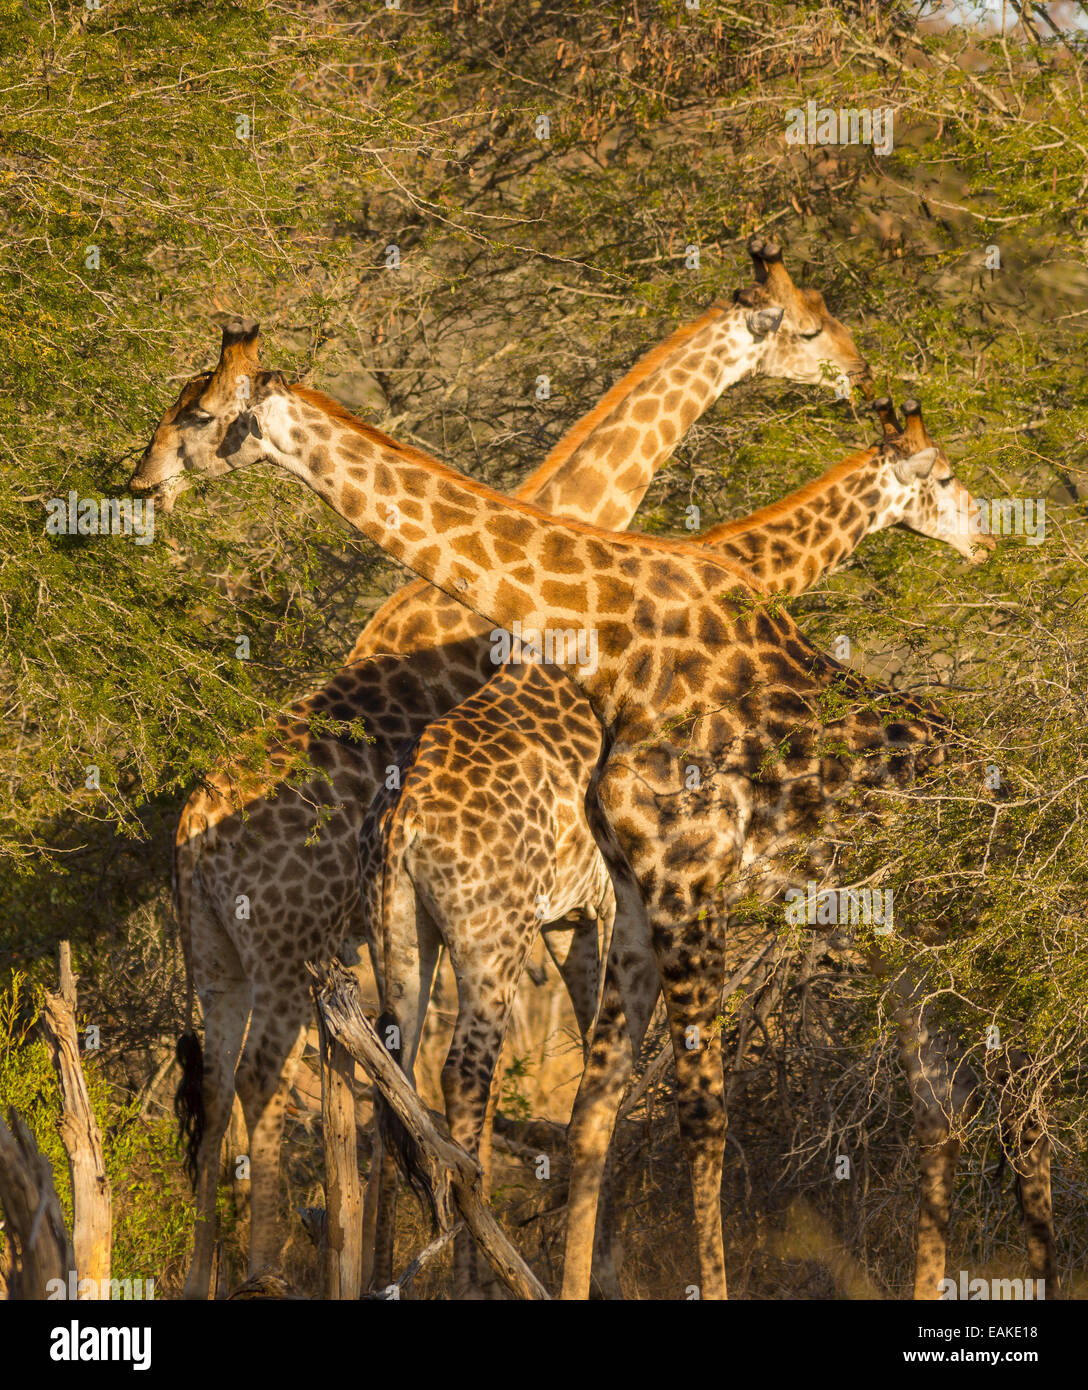 Krüger-Nationalpark, Südafrika - drei Giraffen füttern in den Bäumen. Stockfoto